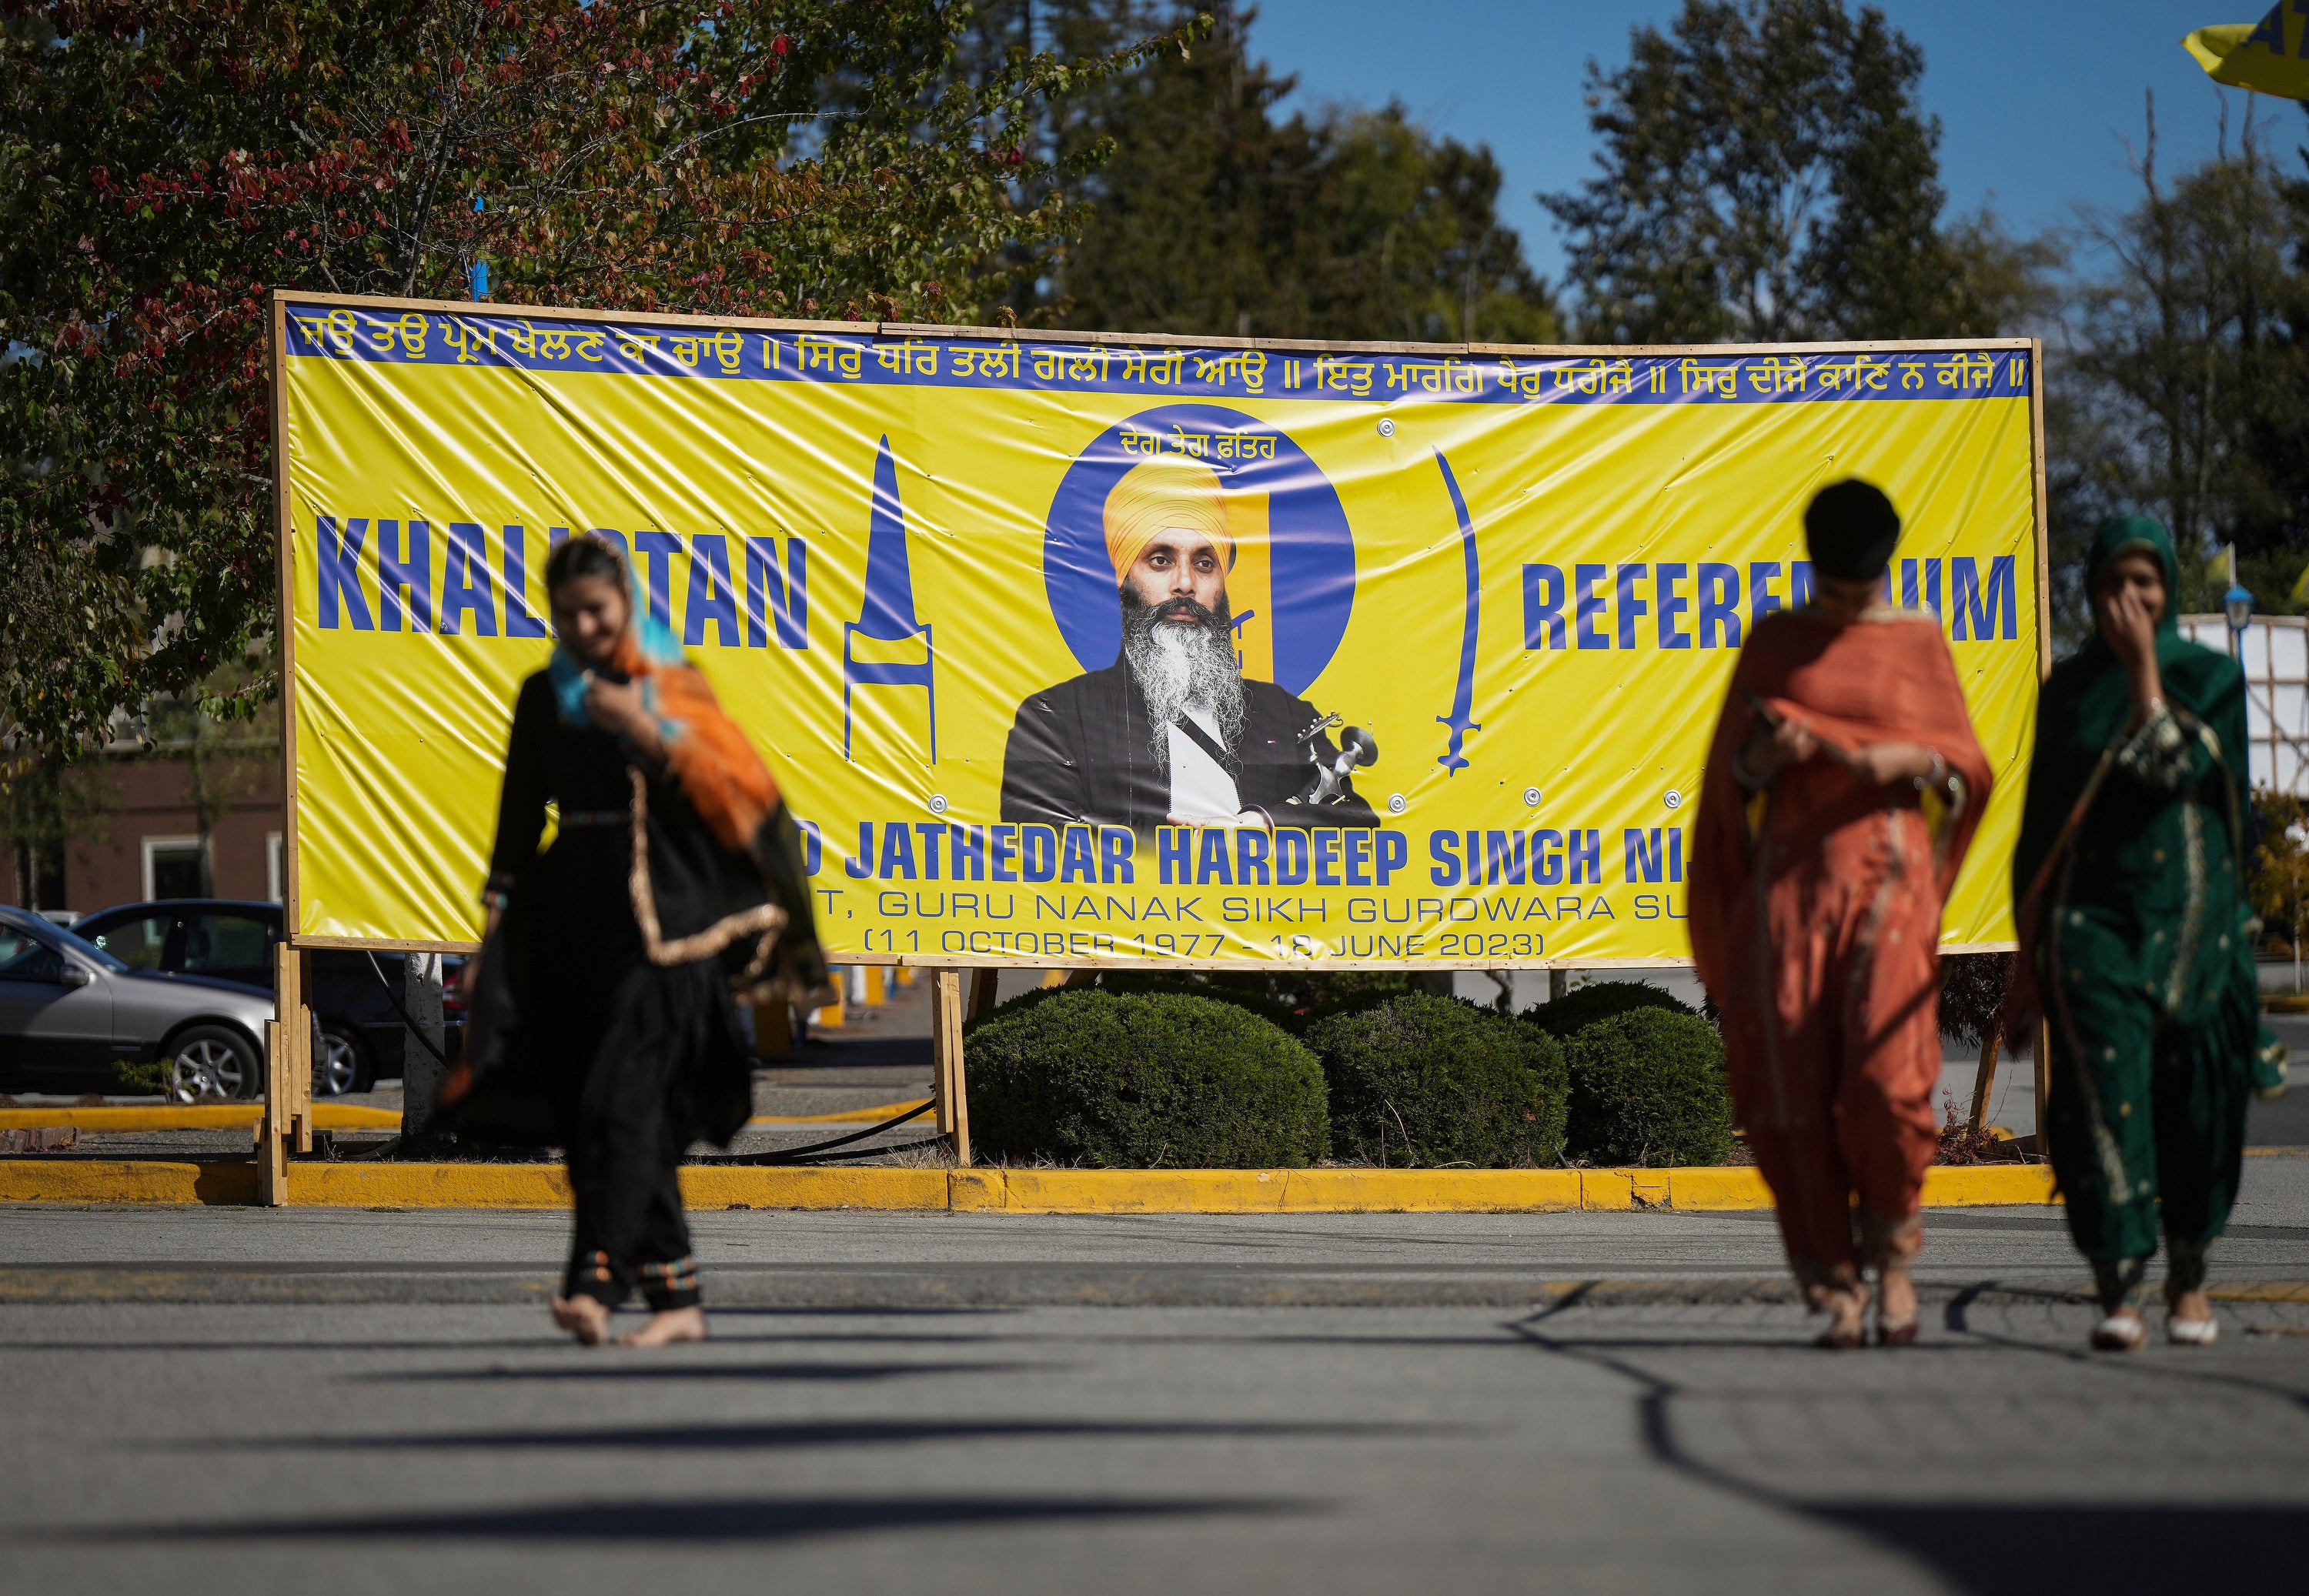 A banner that shows the late Sikh separatist leader Hardeep Singh Nijjar is displayed outside the Guru Nanak Sikh Gurdwara Sahib in Surrey, British Columbia